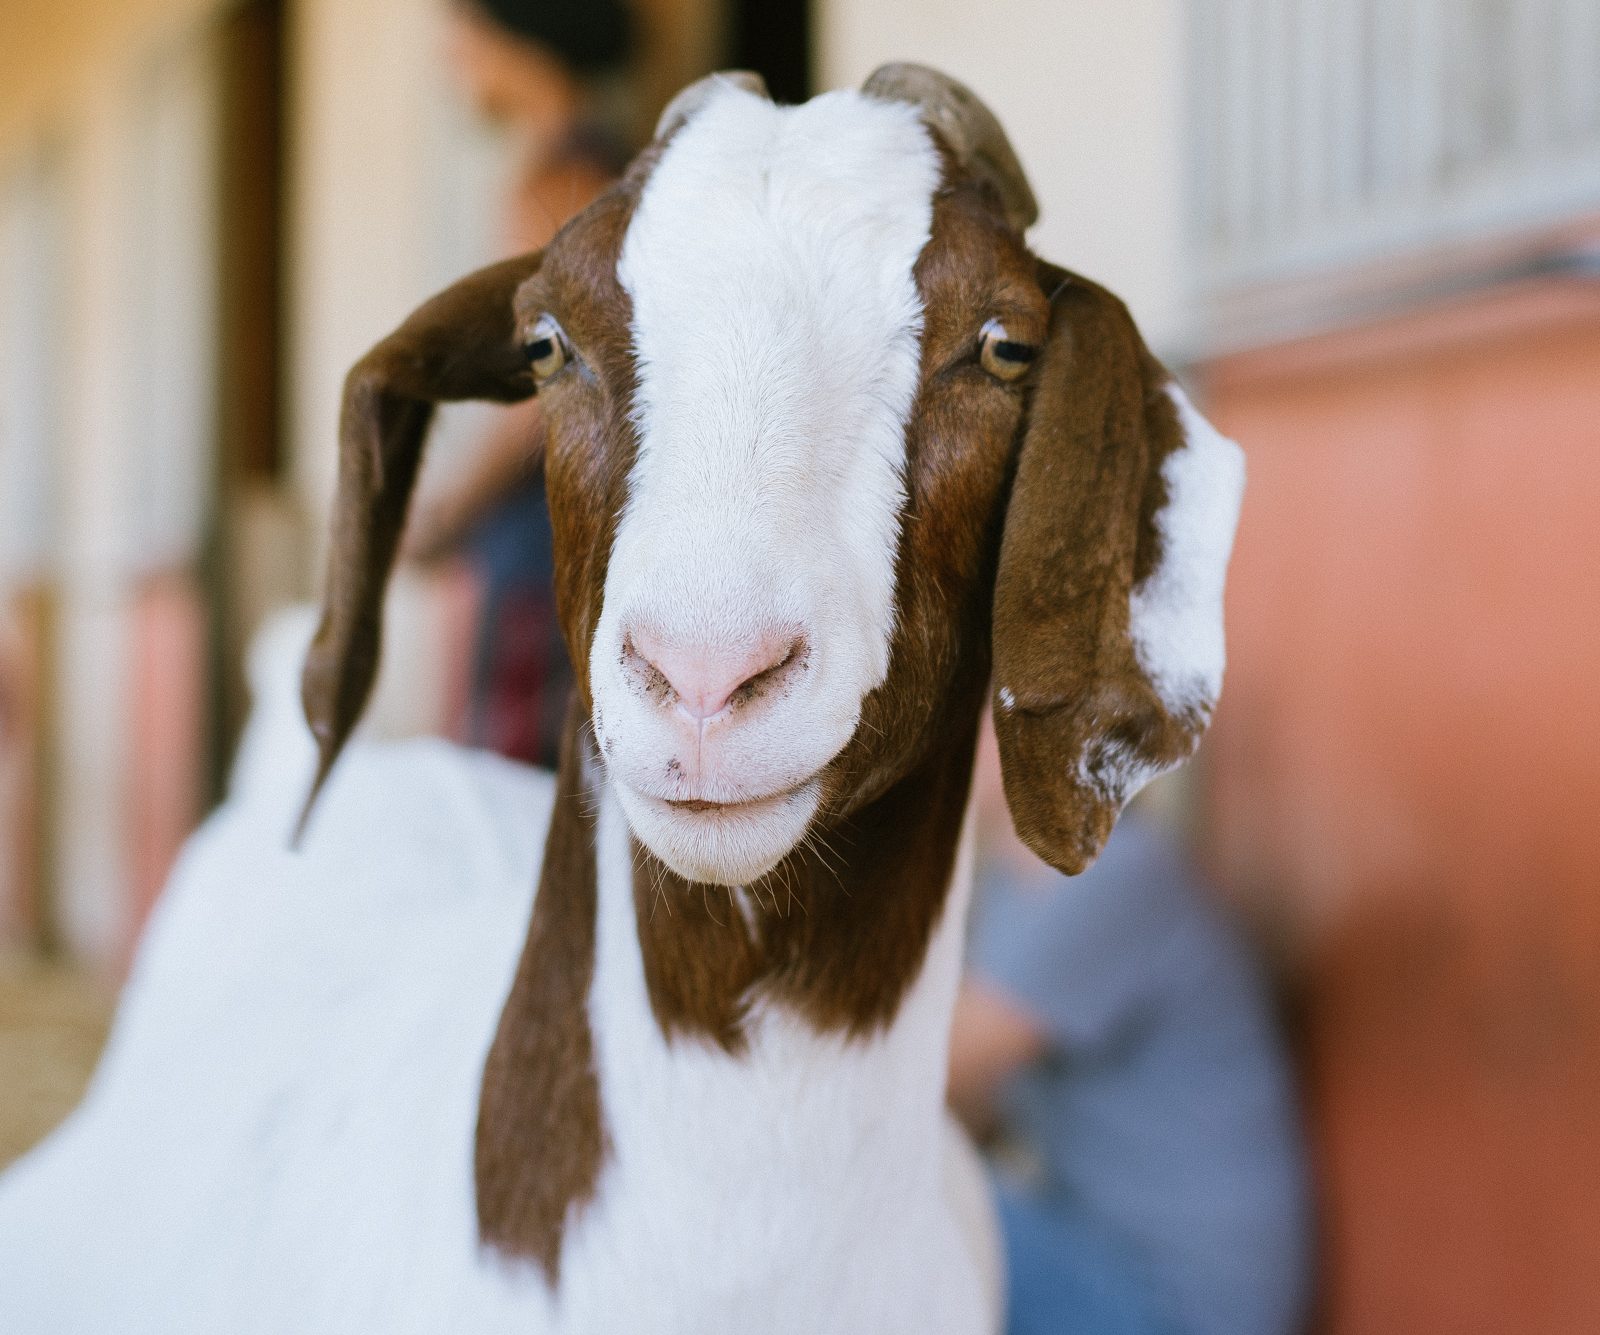 Erika Goat at Farm Sanctuary's Southern California shelter